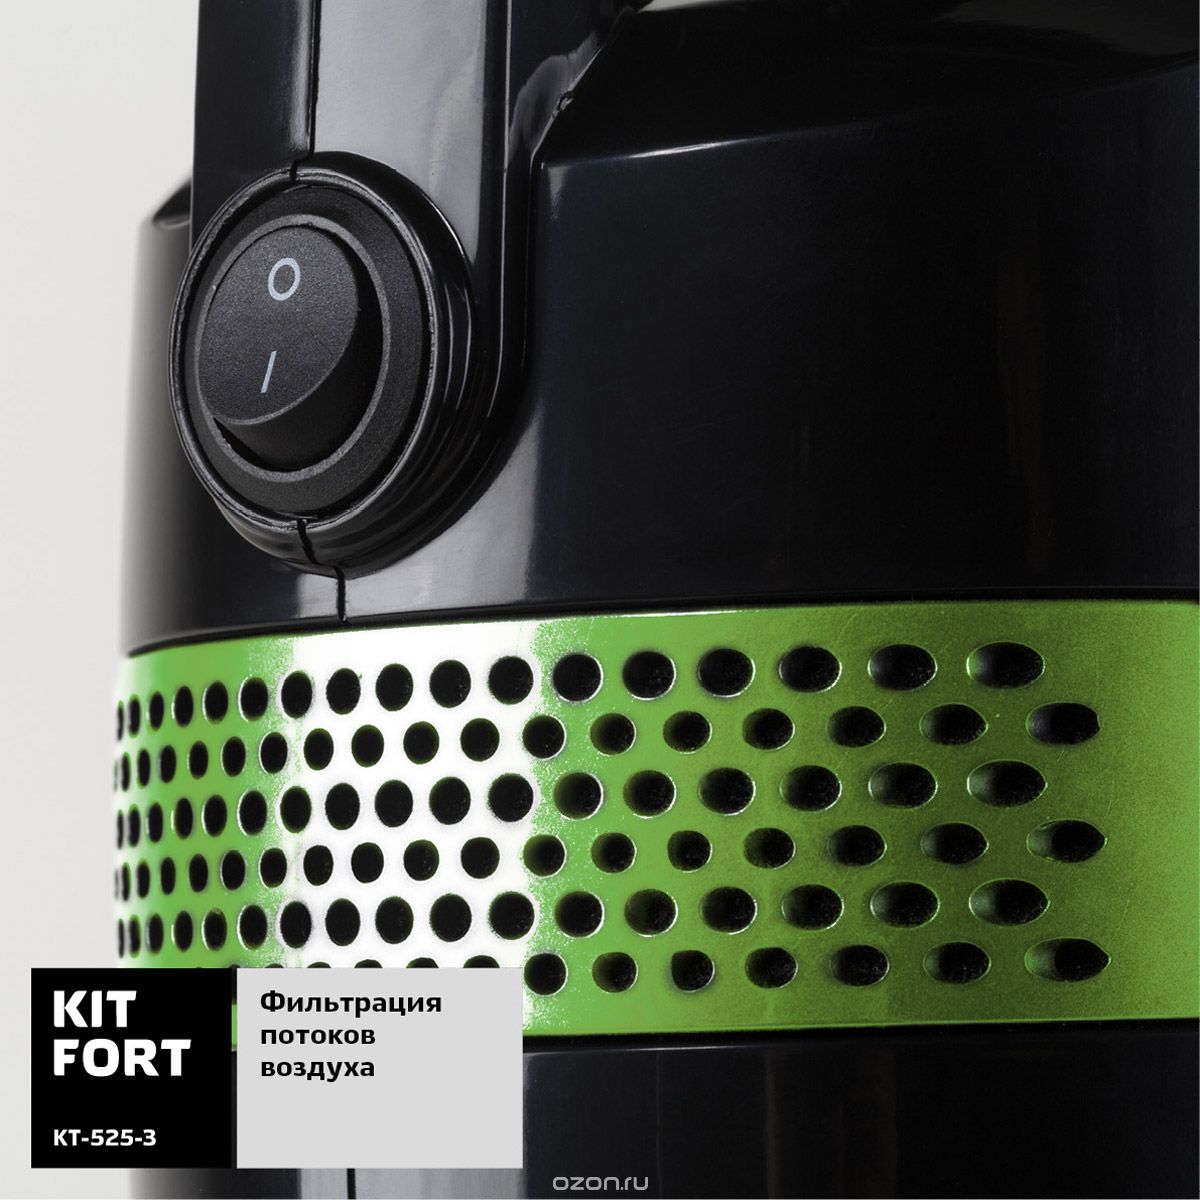   Kitfort -525, Green